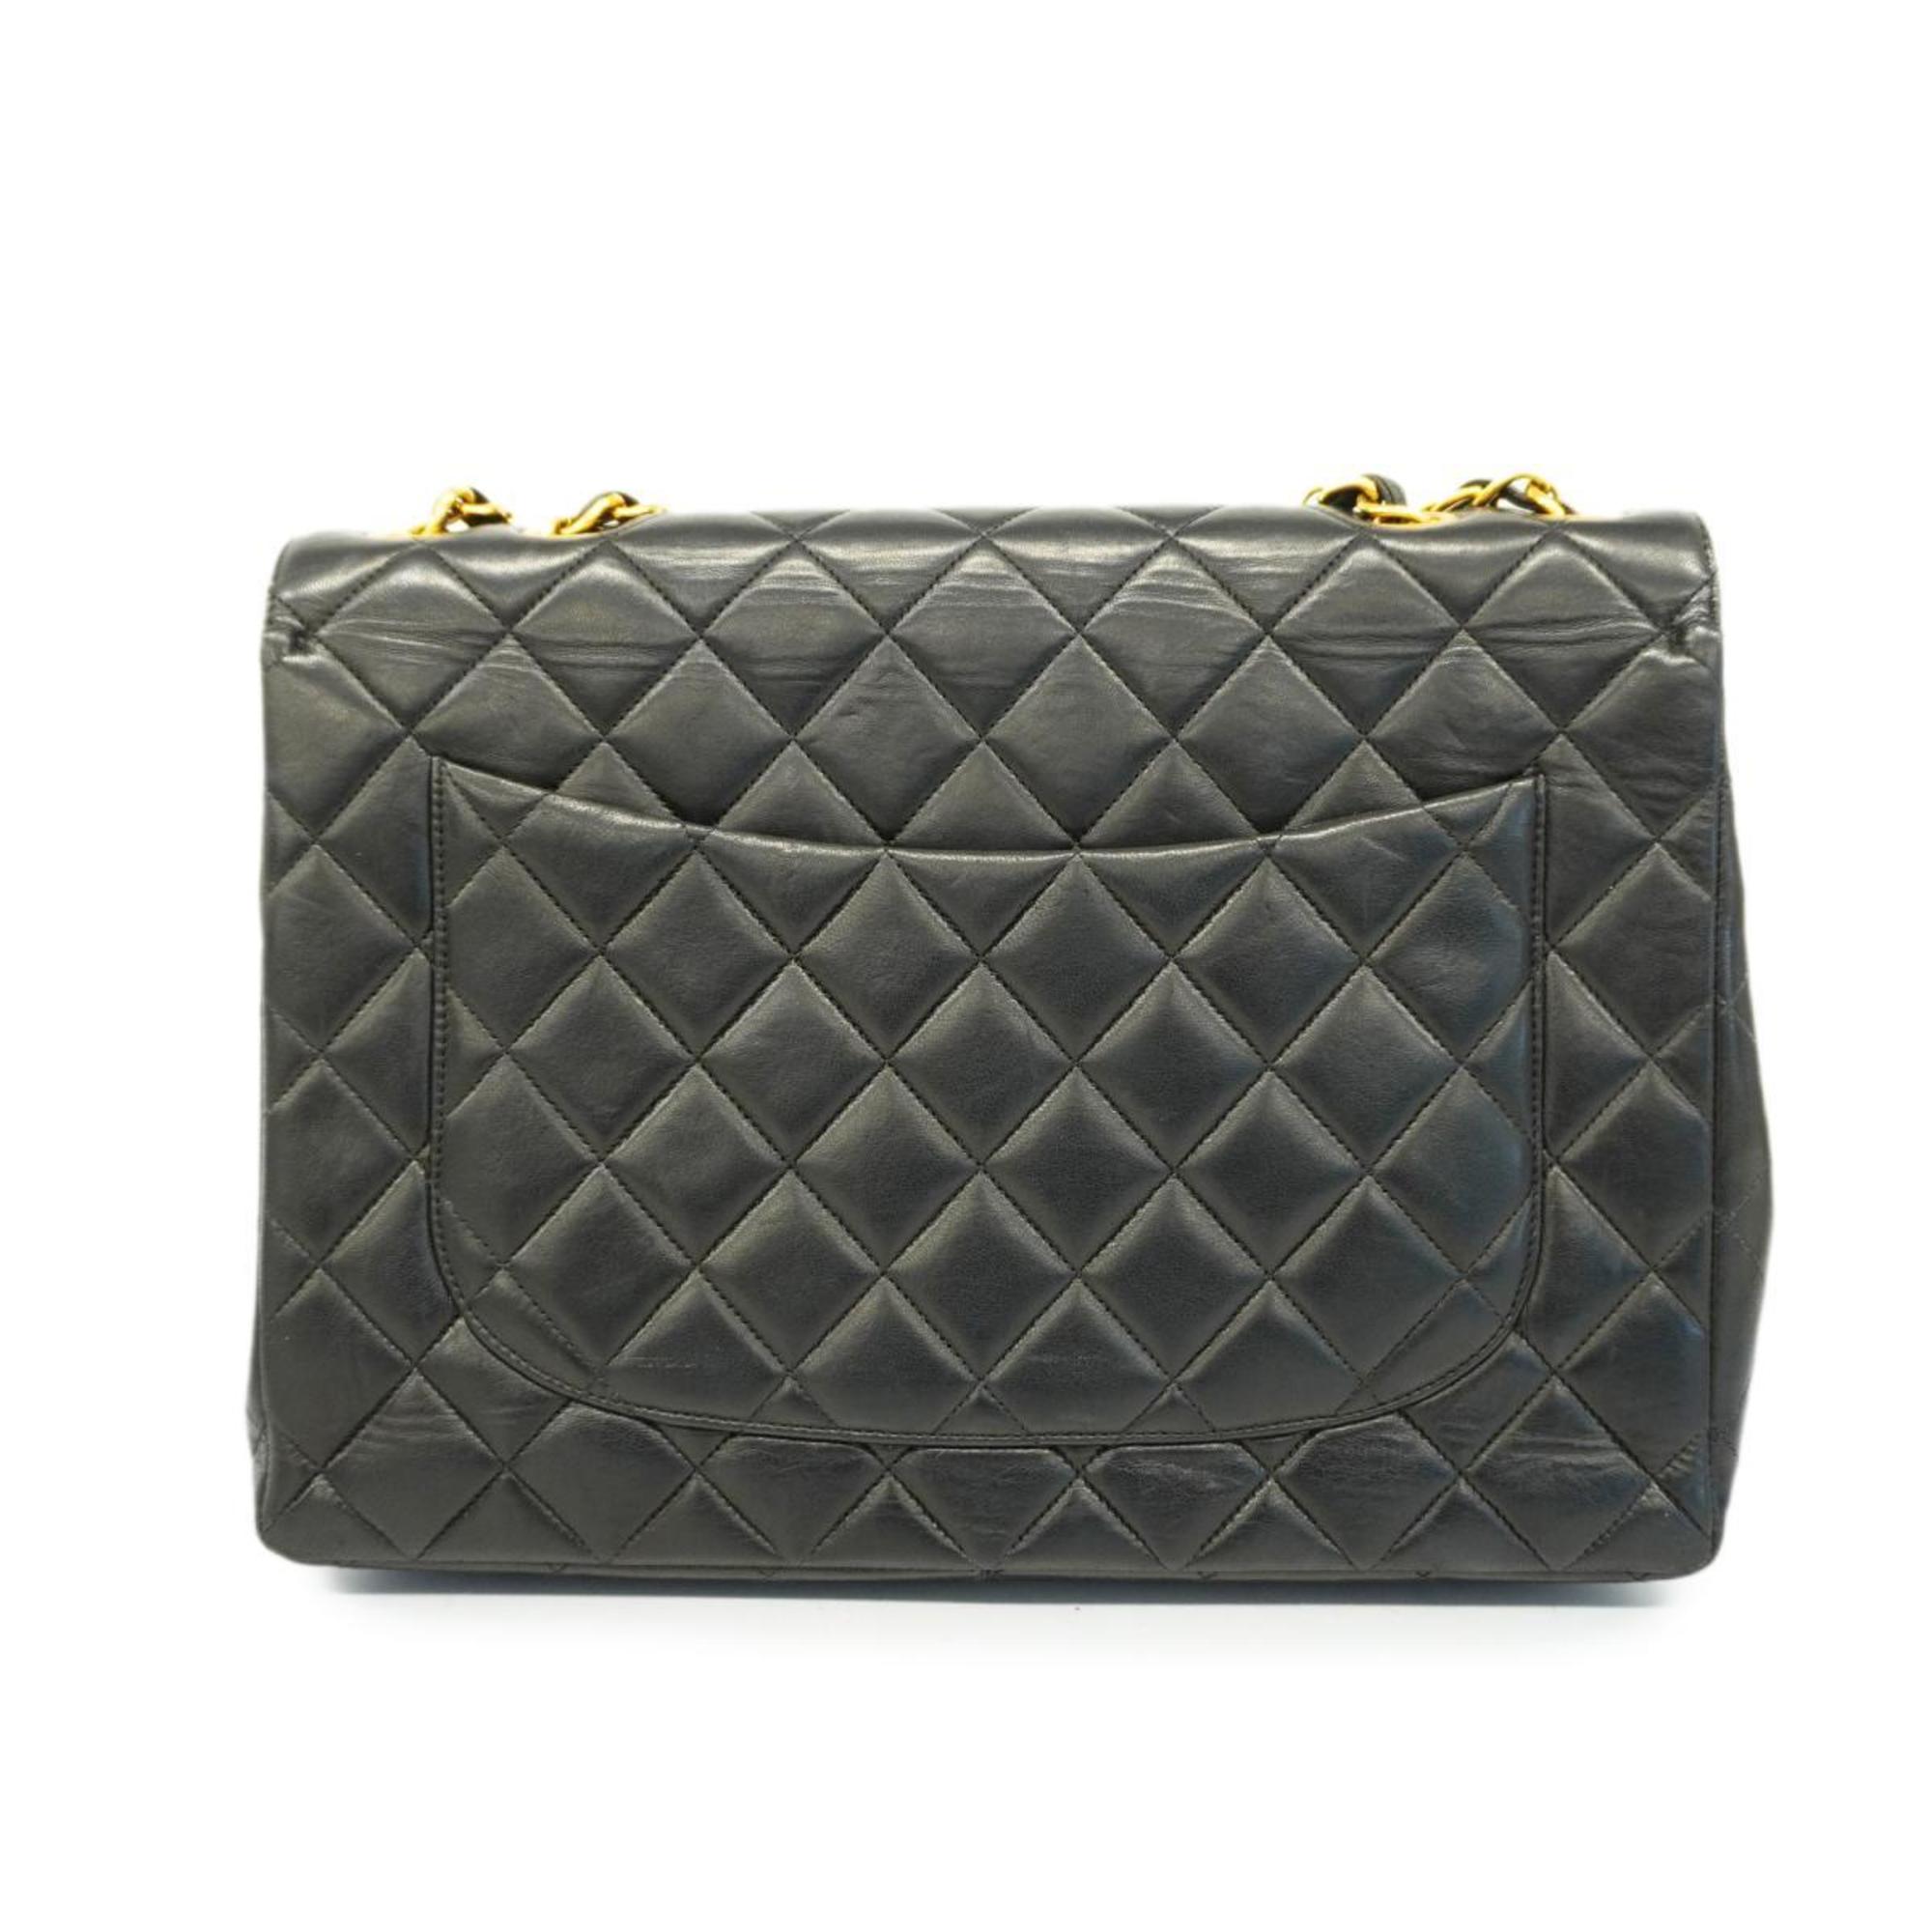 Chanel Shoulder Bag Deca Matelasse W Chain Lambskin Black Women's